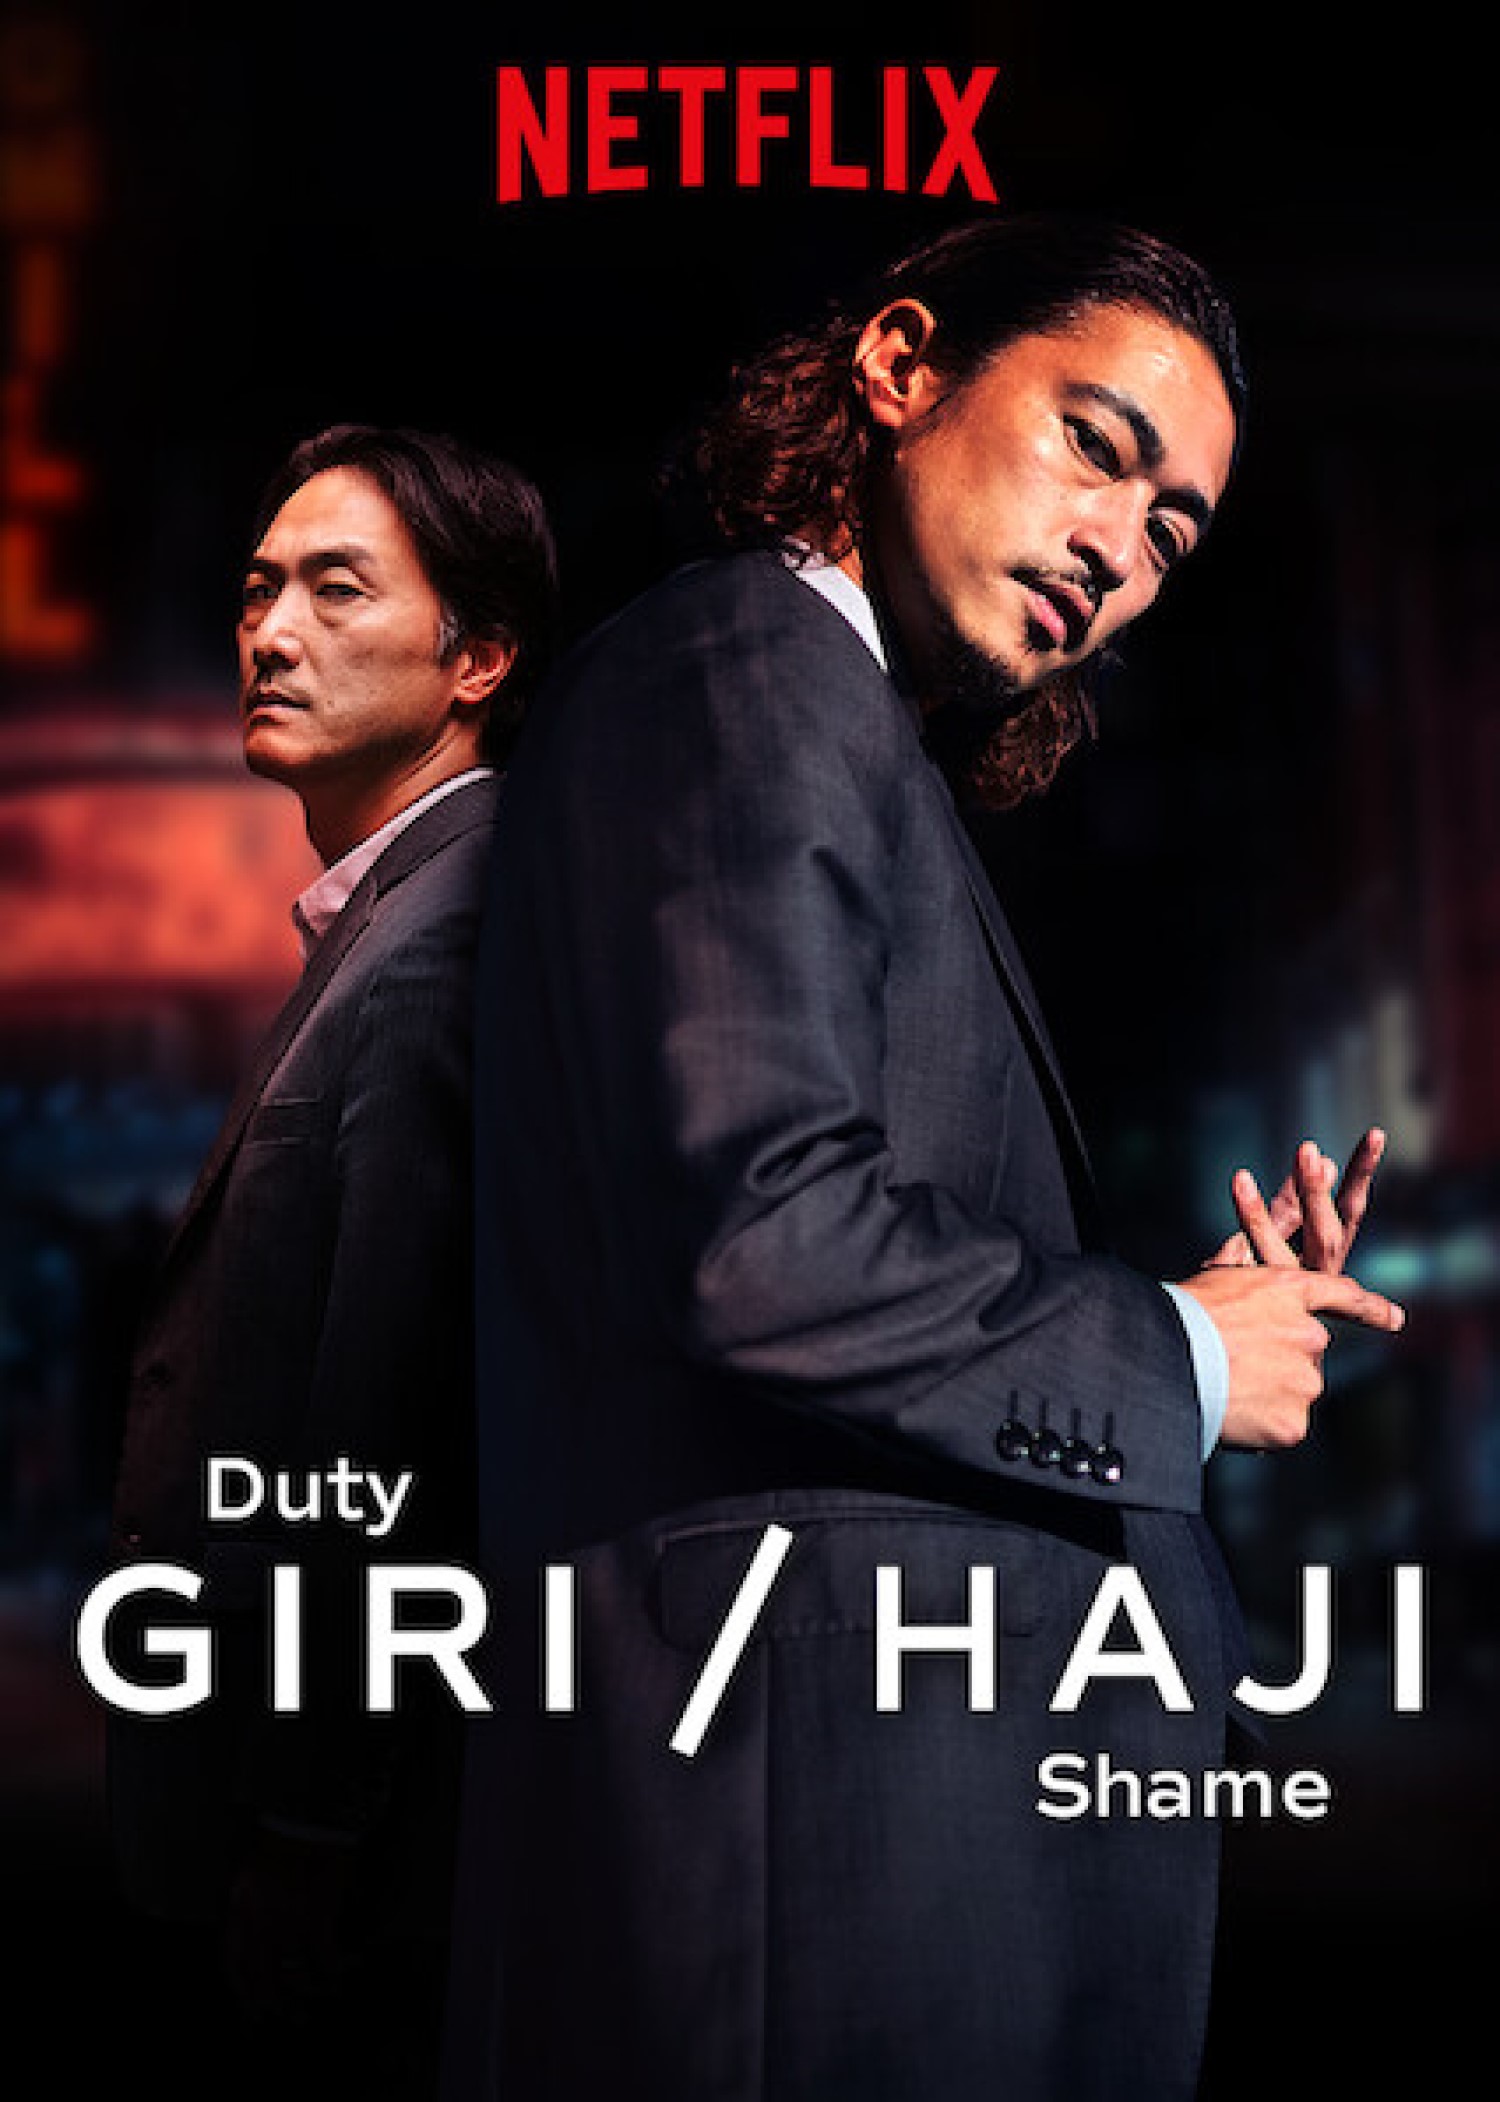 Giri/Haji (Series) - TV Tropes